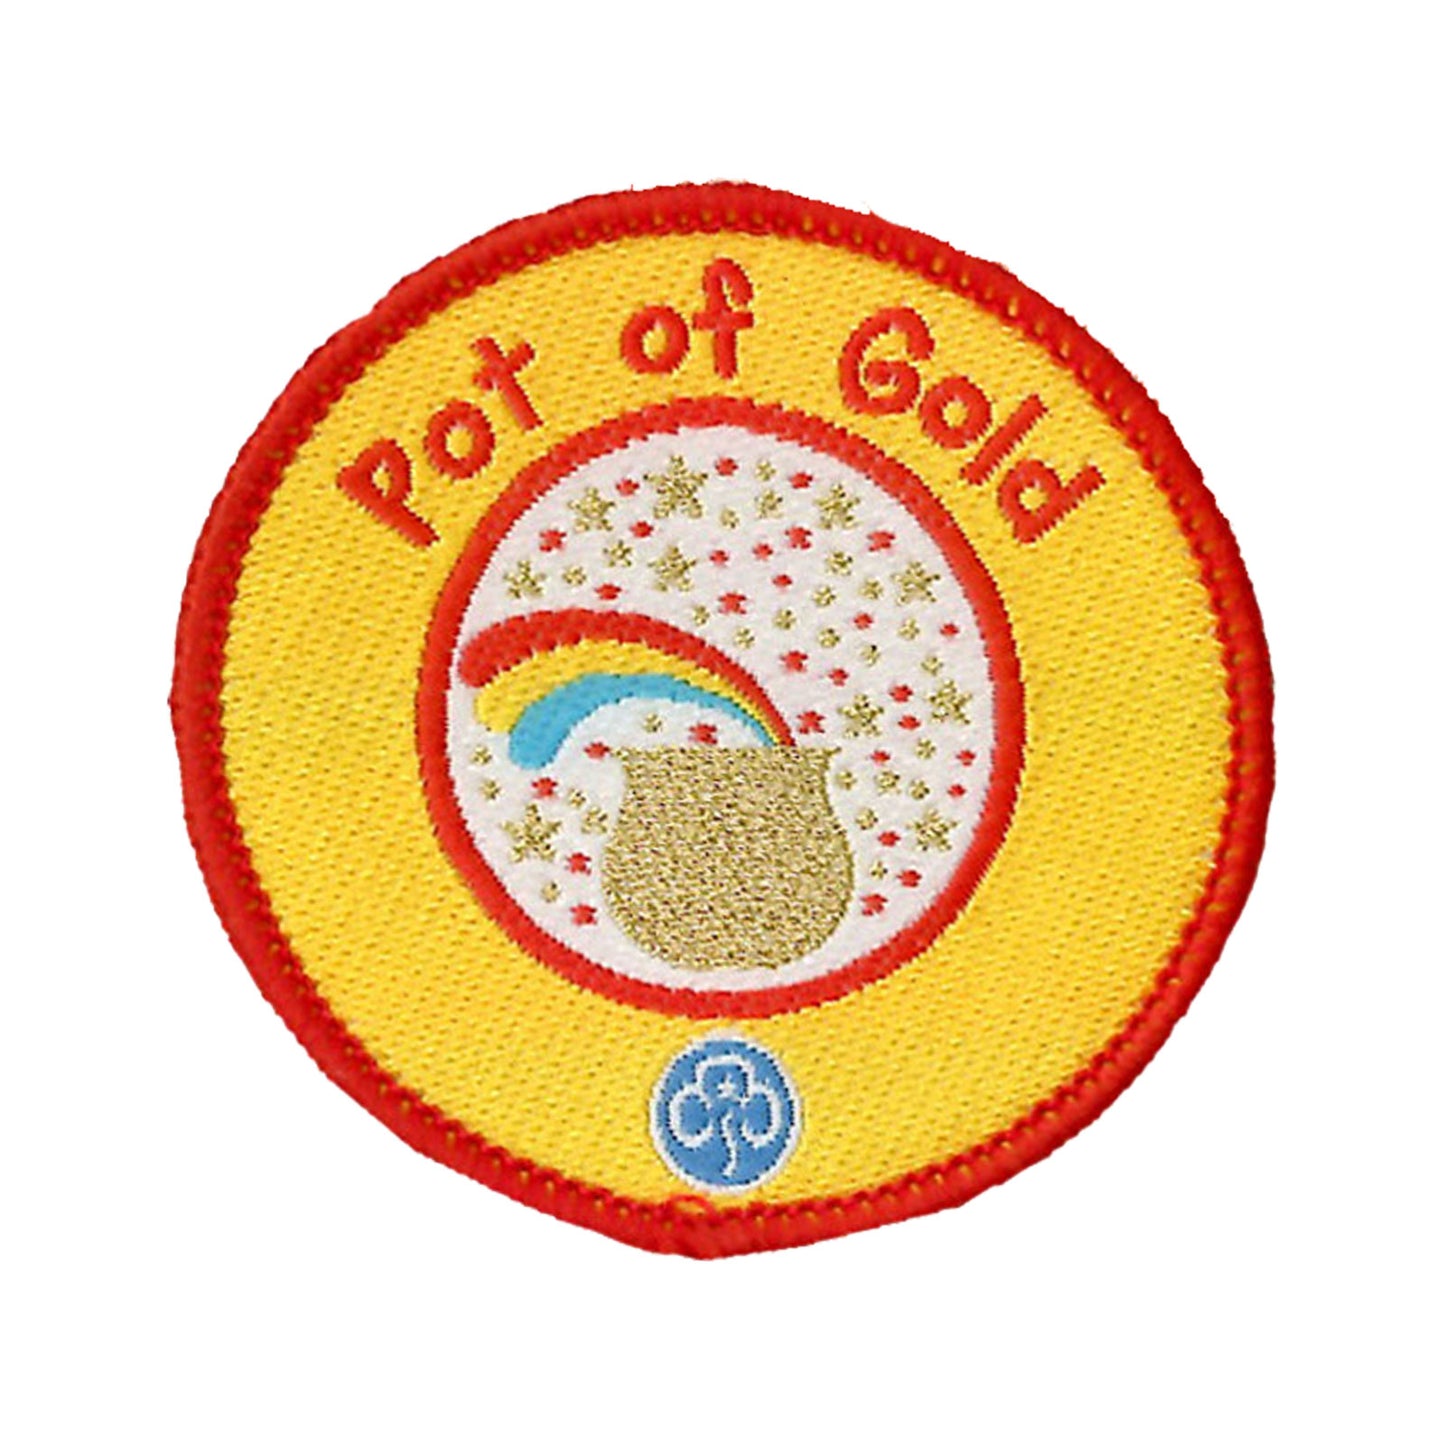 Pot of Gold Badges (5pk)